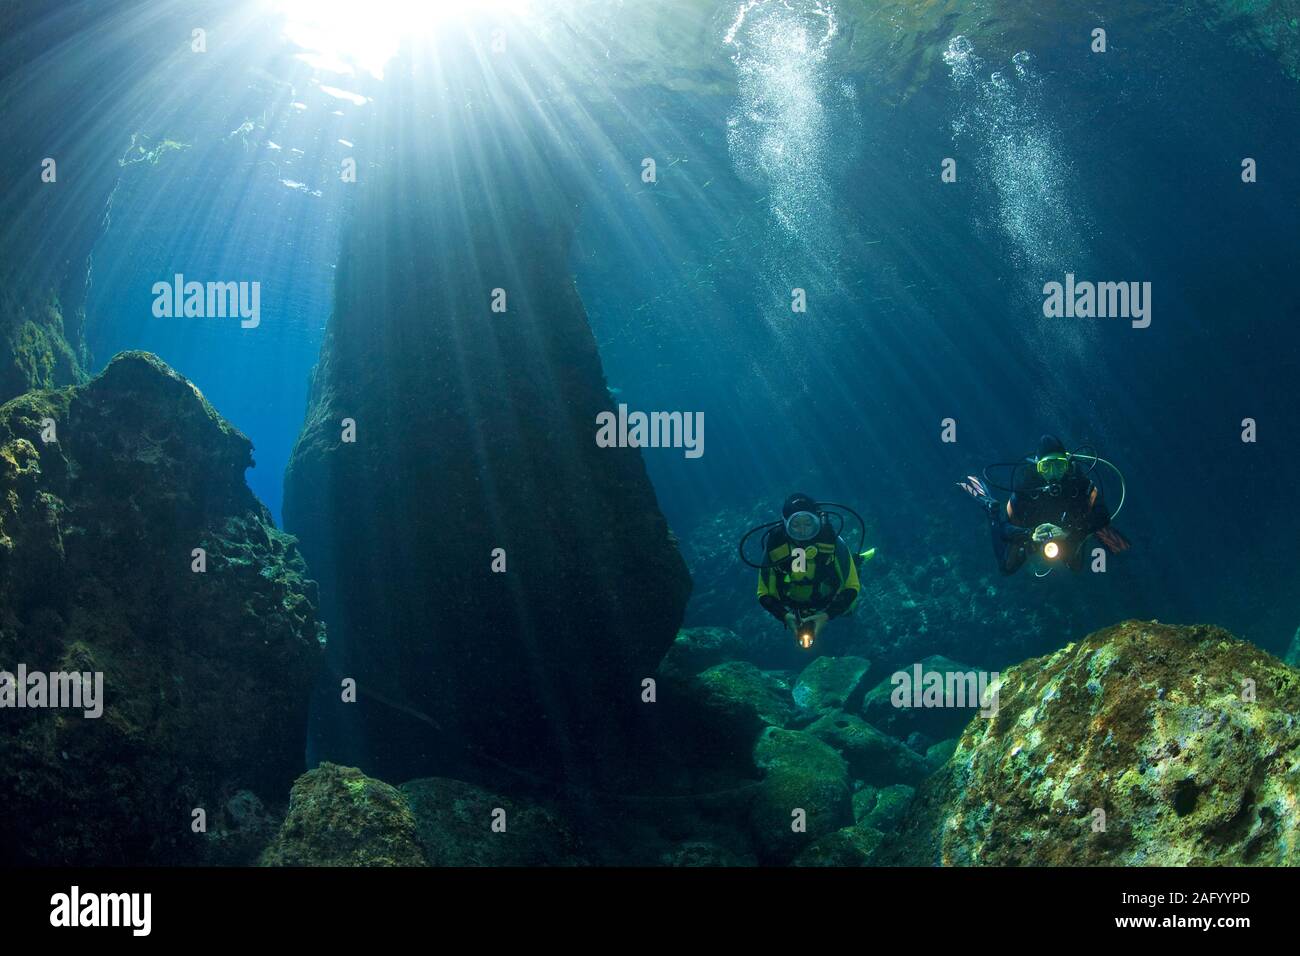 Scuba diver in a rocky mediterranean reef flooded with sunlight, Zakynthos, island, Greece Stock Photo